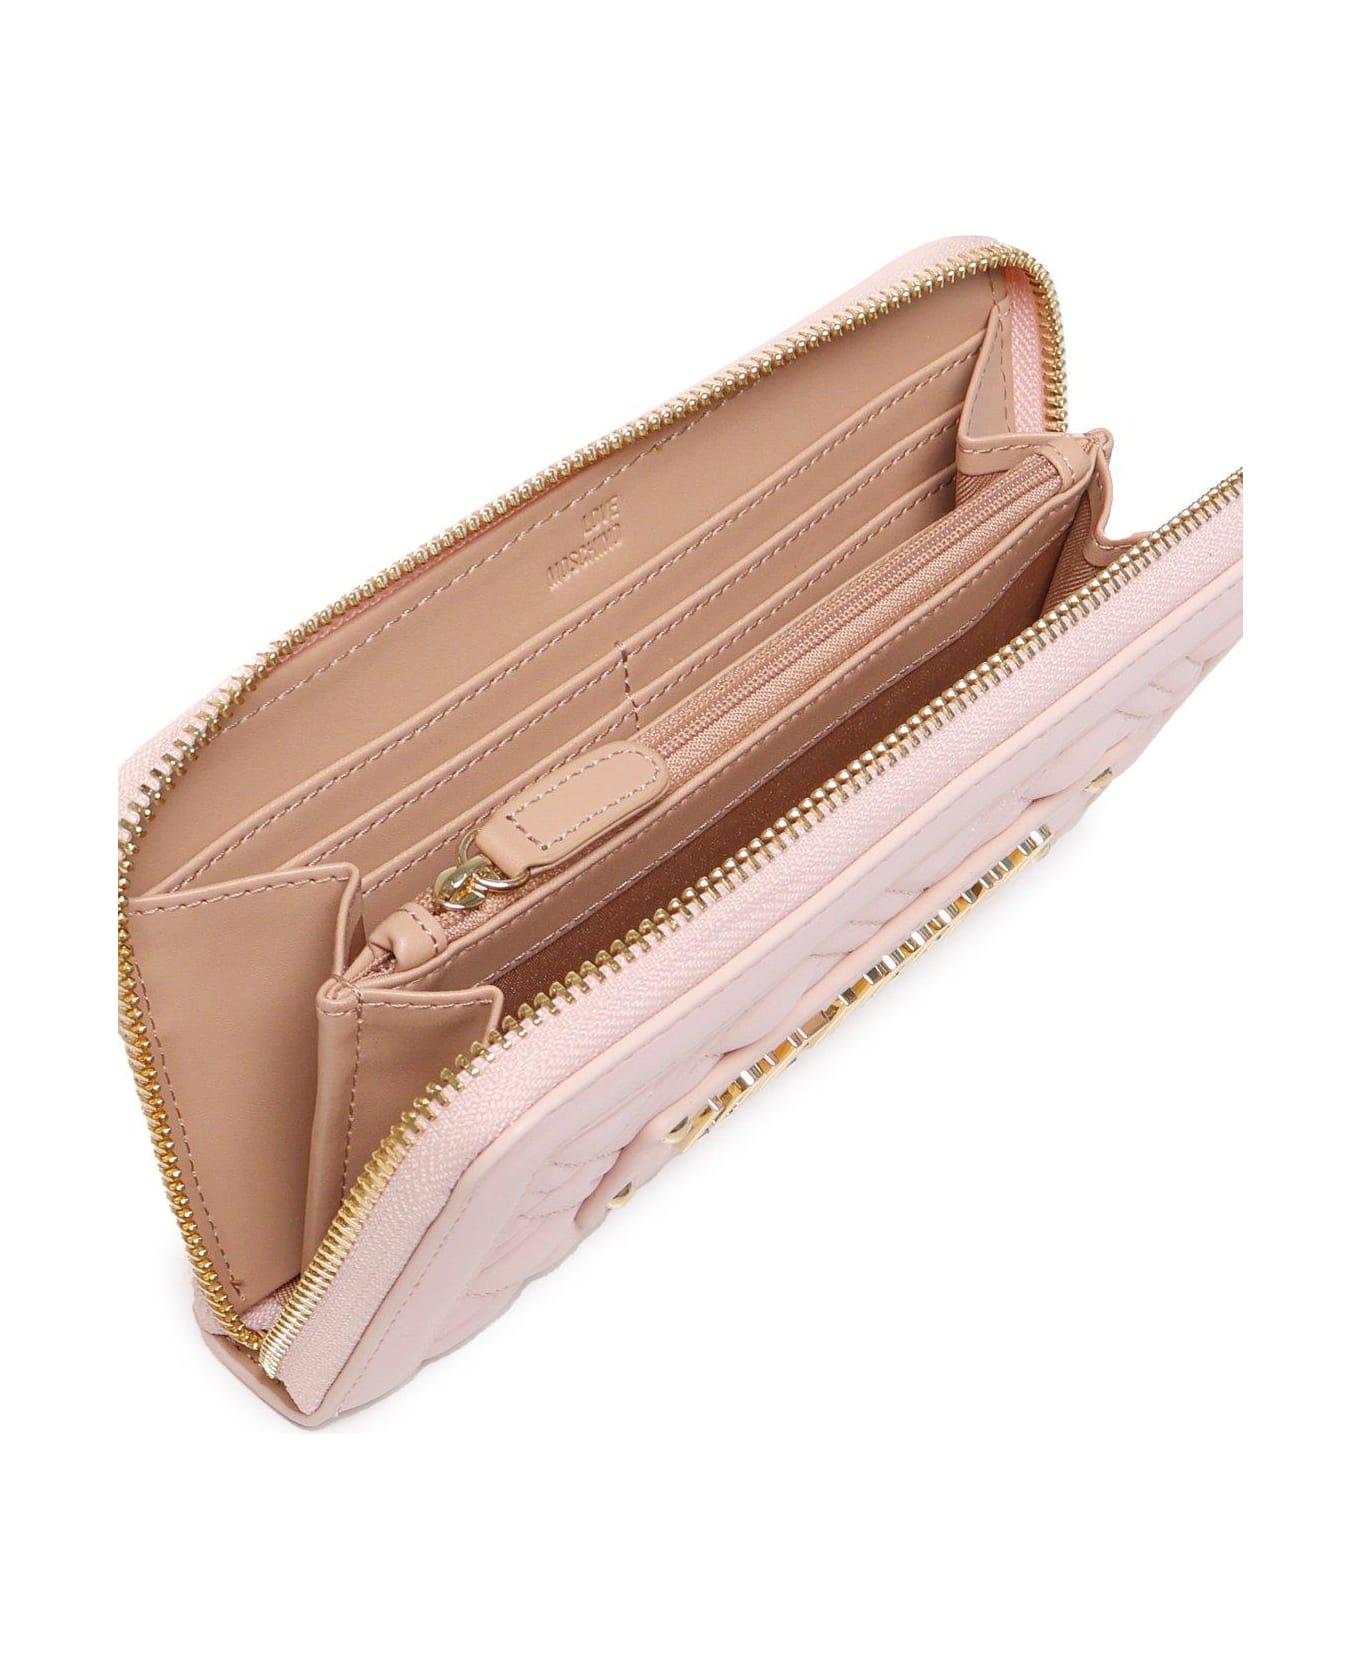 Love Moschino Quilted Zip Around Wallet - Pink